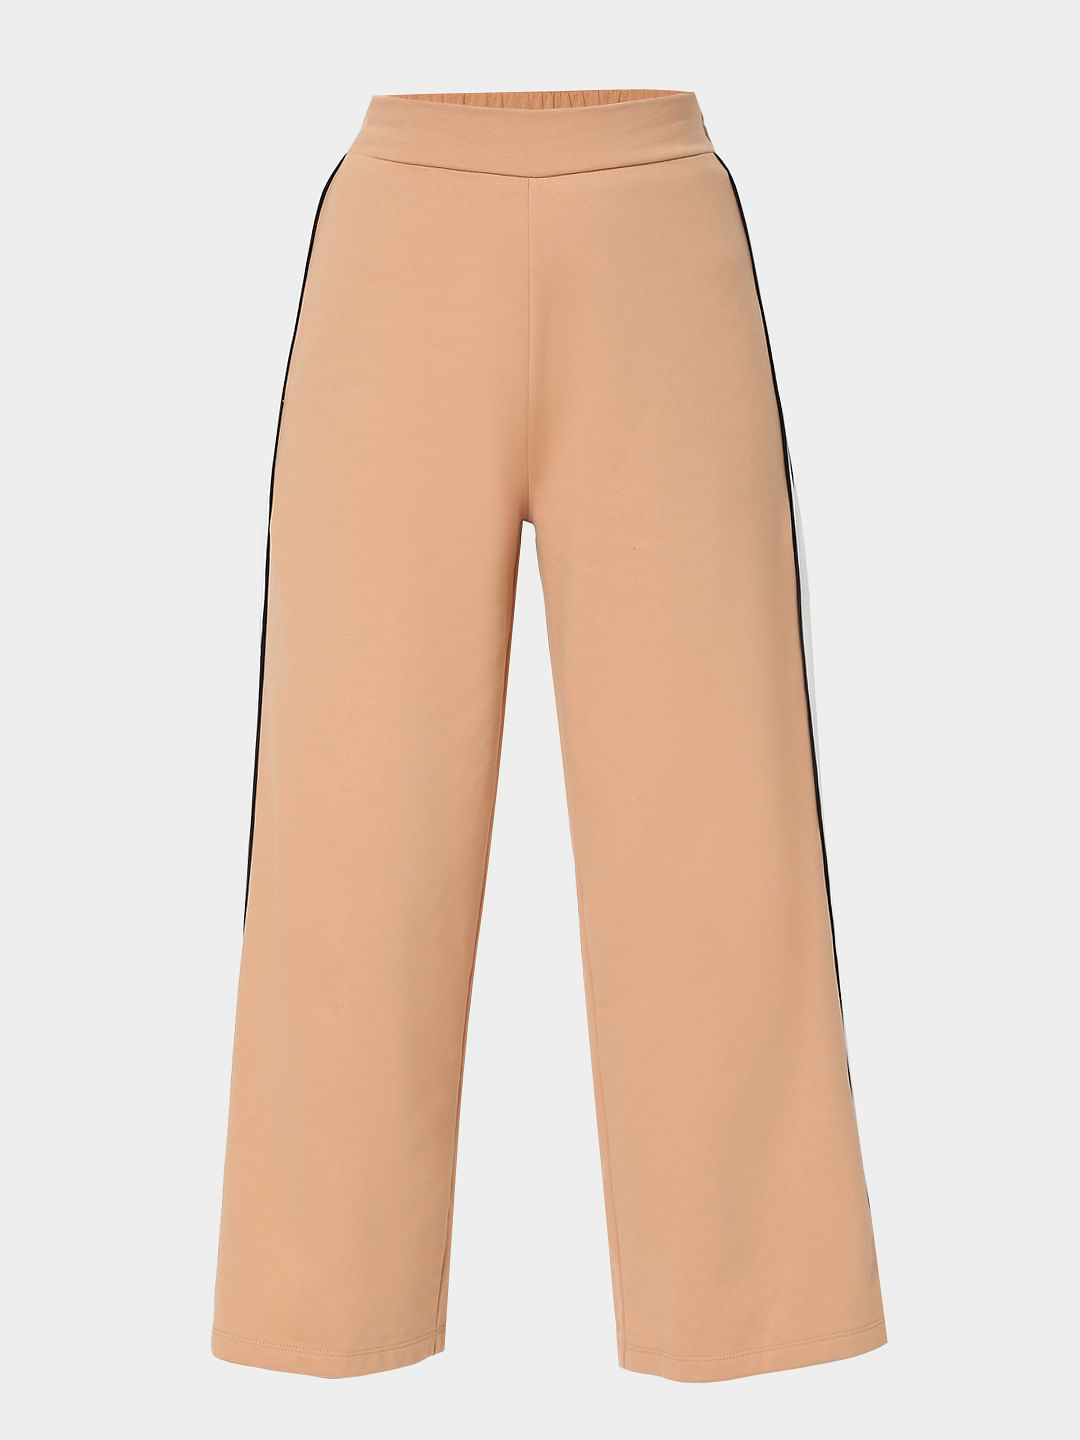 Elegant Beige Men's Trousers | Men's Beige Straight Pants | Men's Pants  Elegant Beige - Casual Pants - Aliexpress